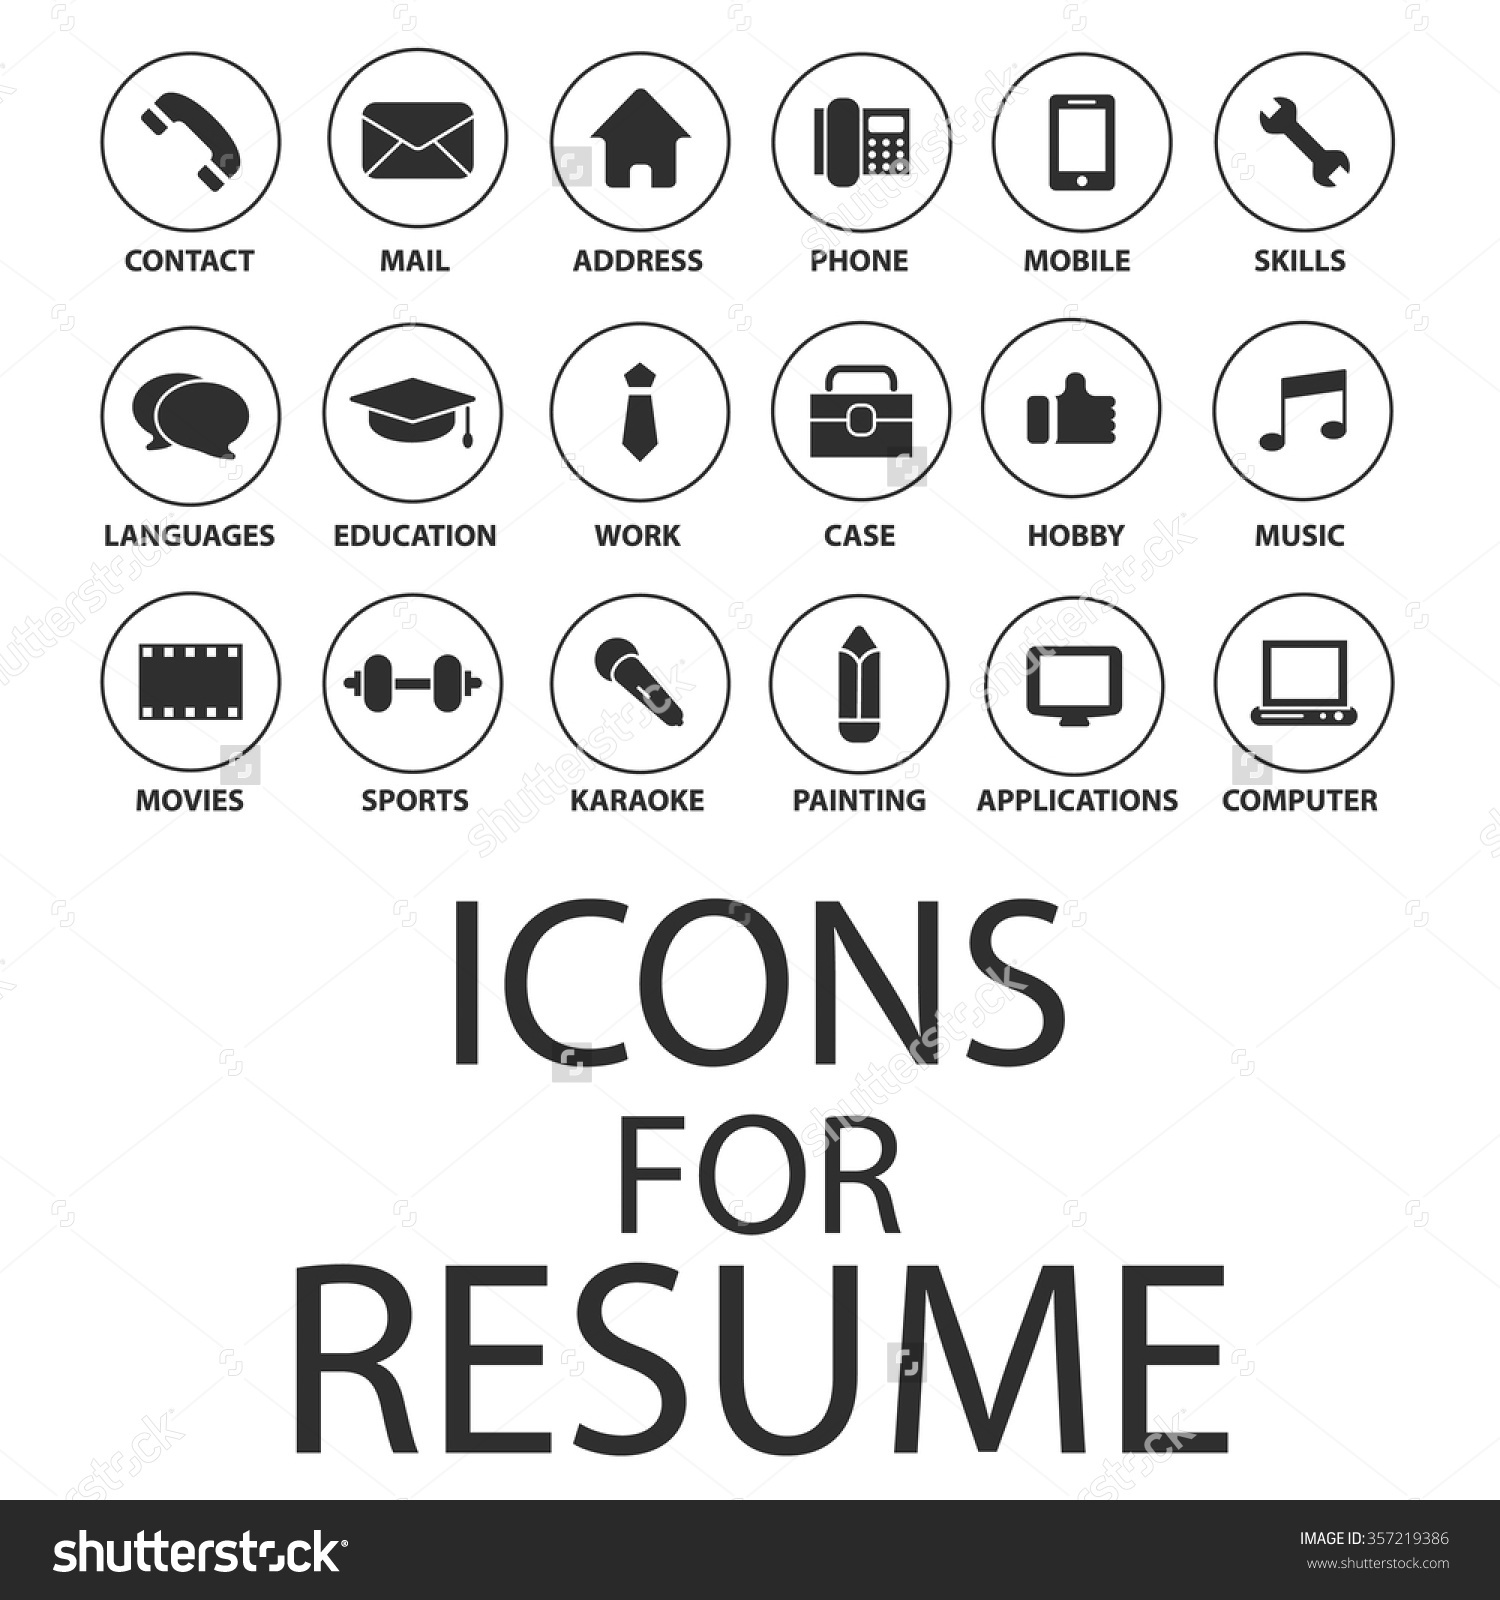 Resume icons | Noun Project